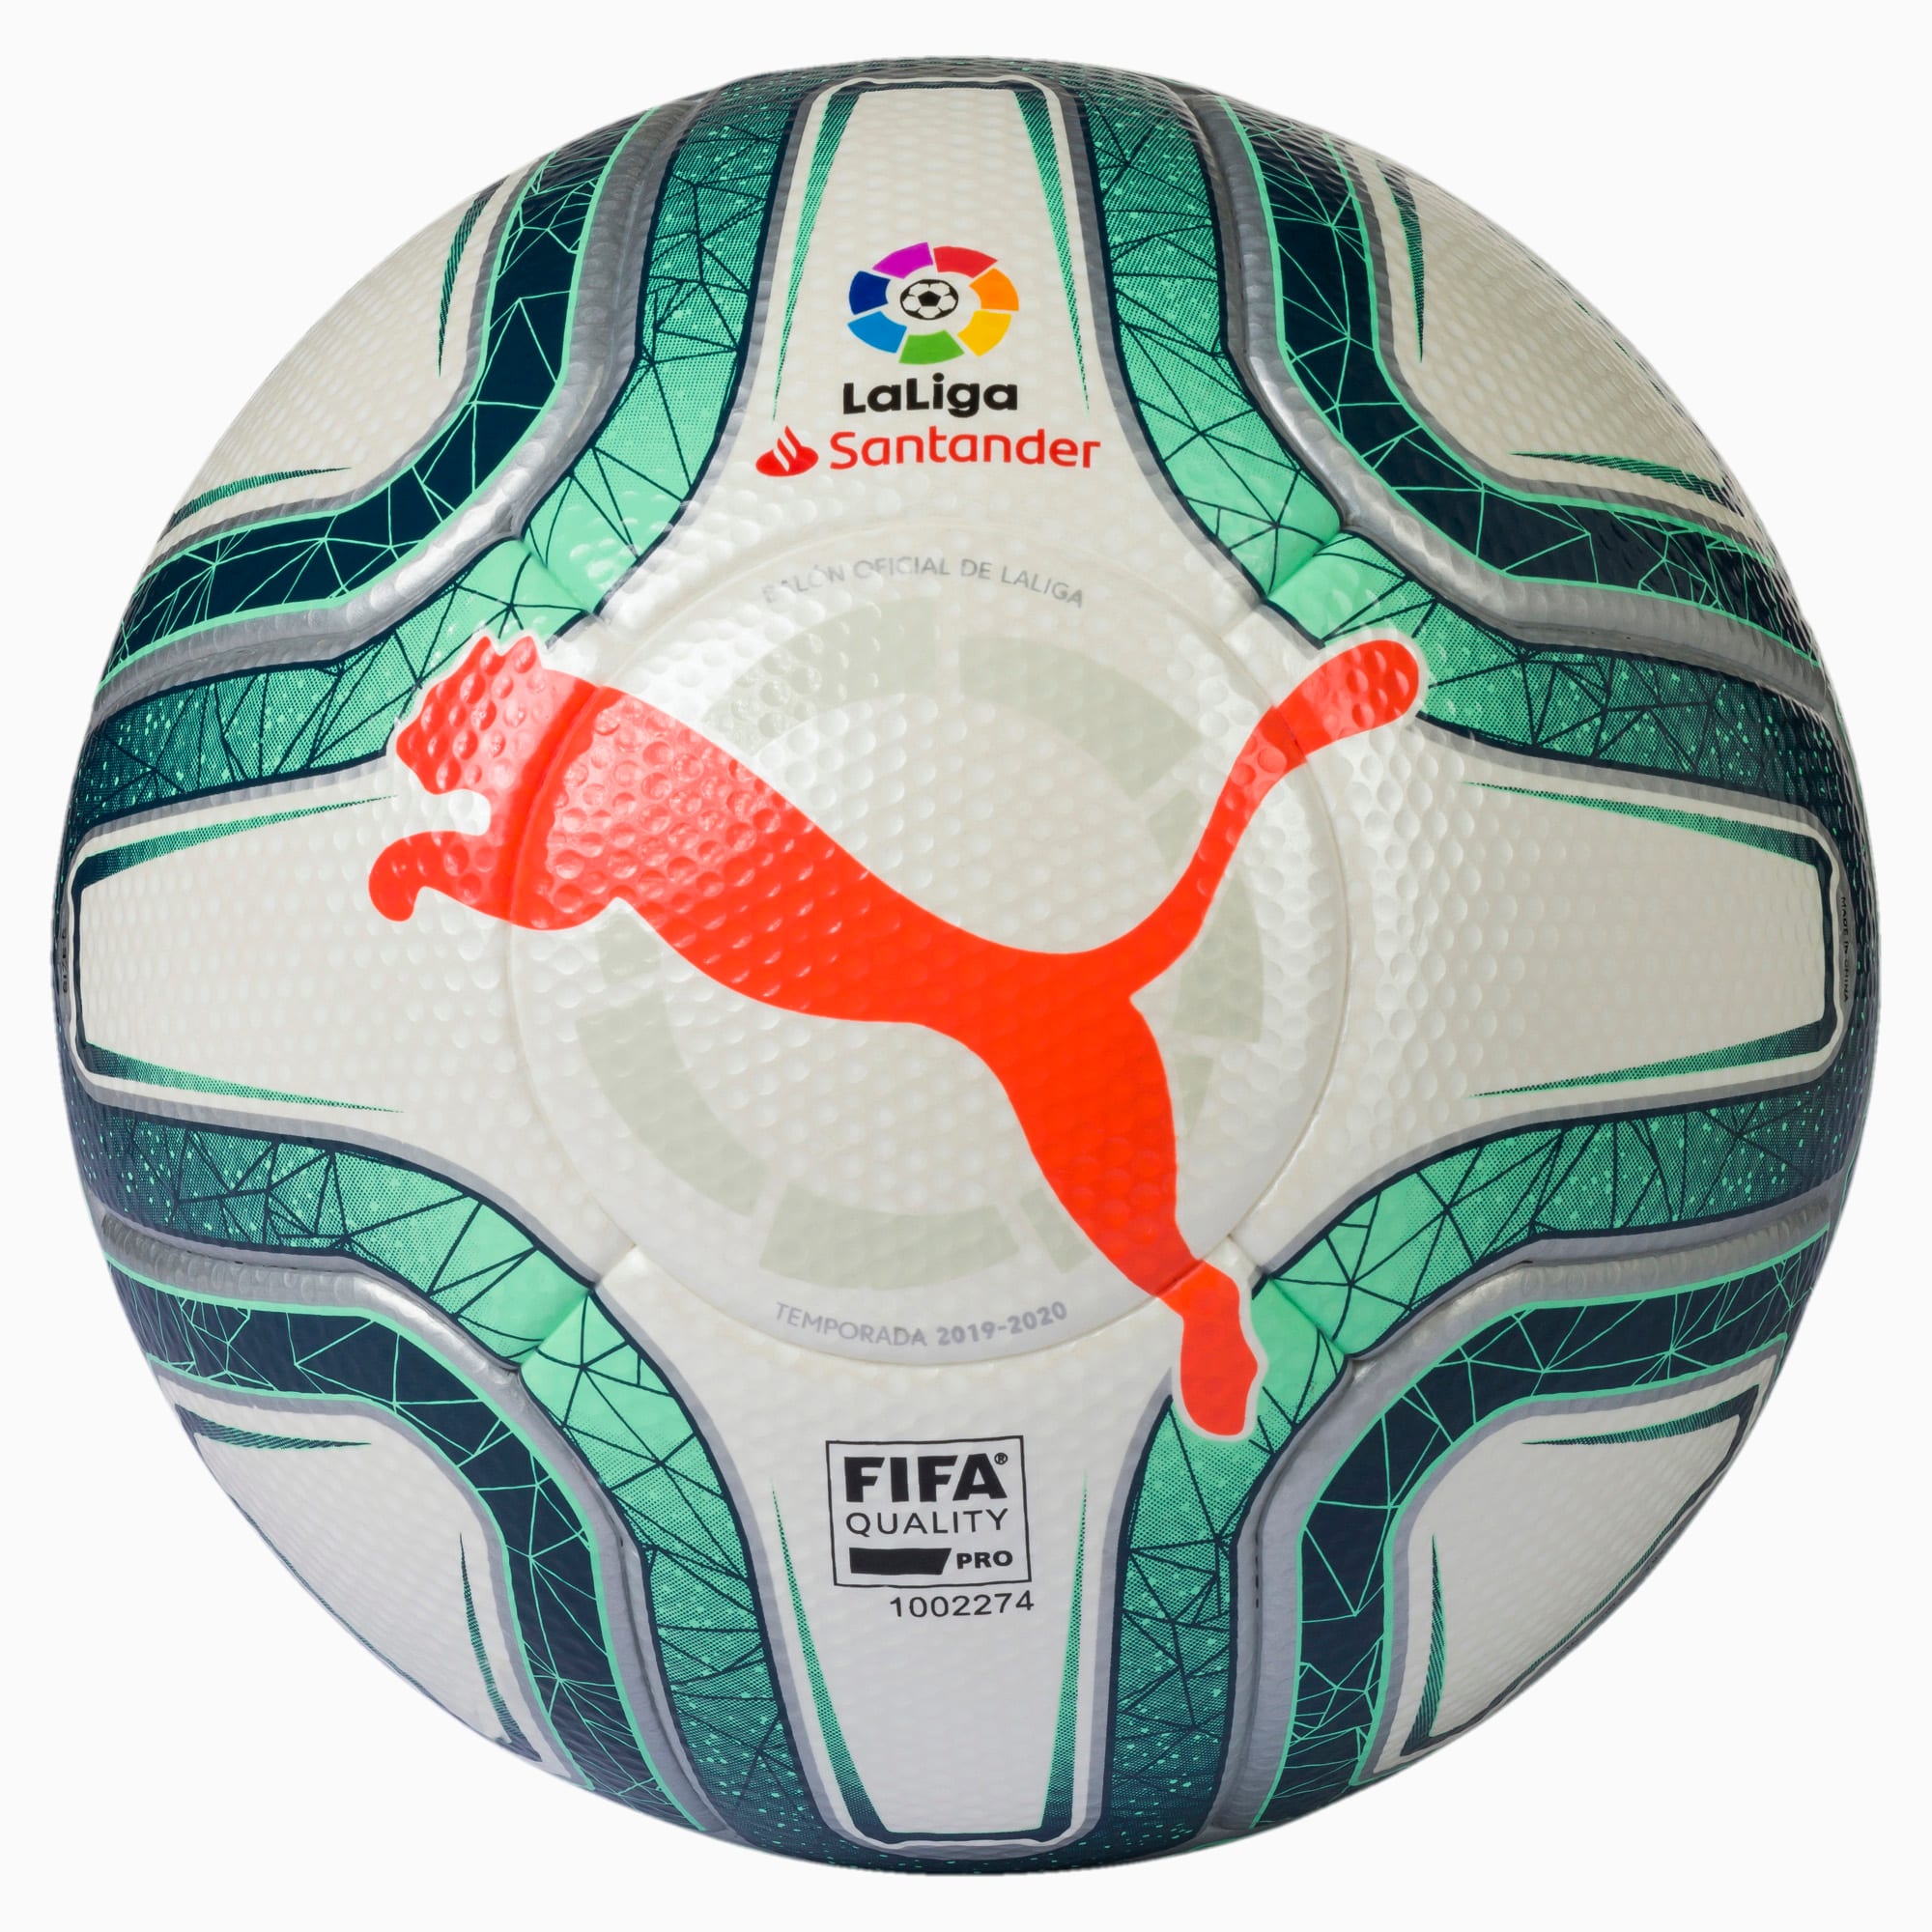 La Liga 1 FIFA Quality Pro Soccer Ball